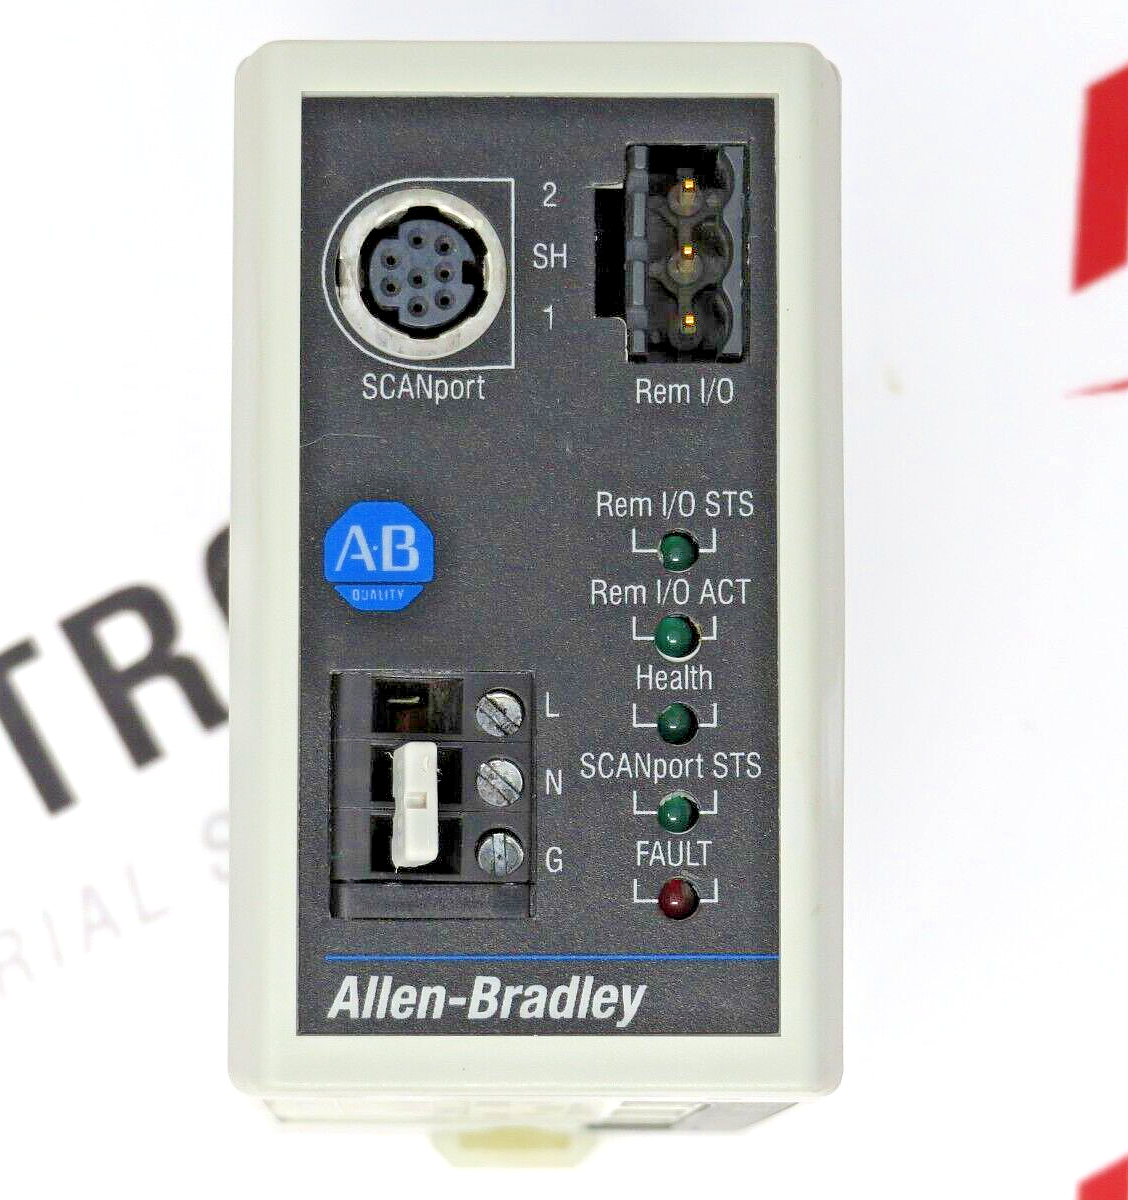 Allen-Bradley 1203-GD1 Remote I/O Communications Module